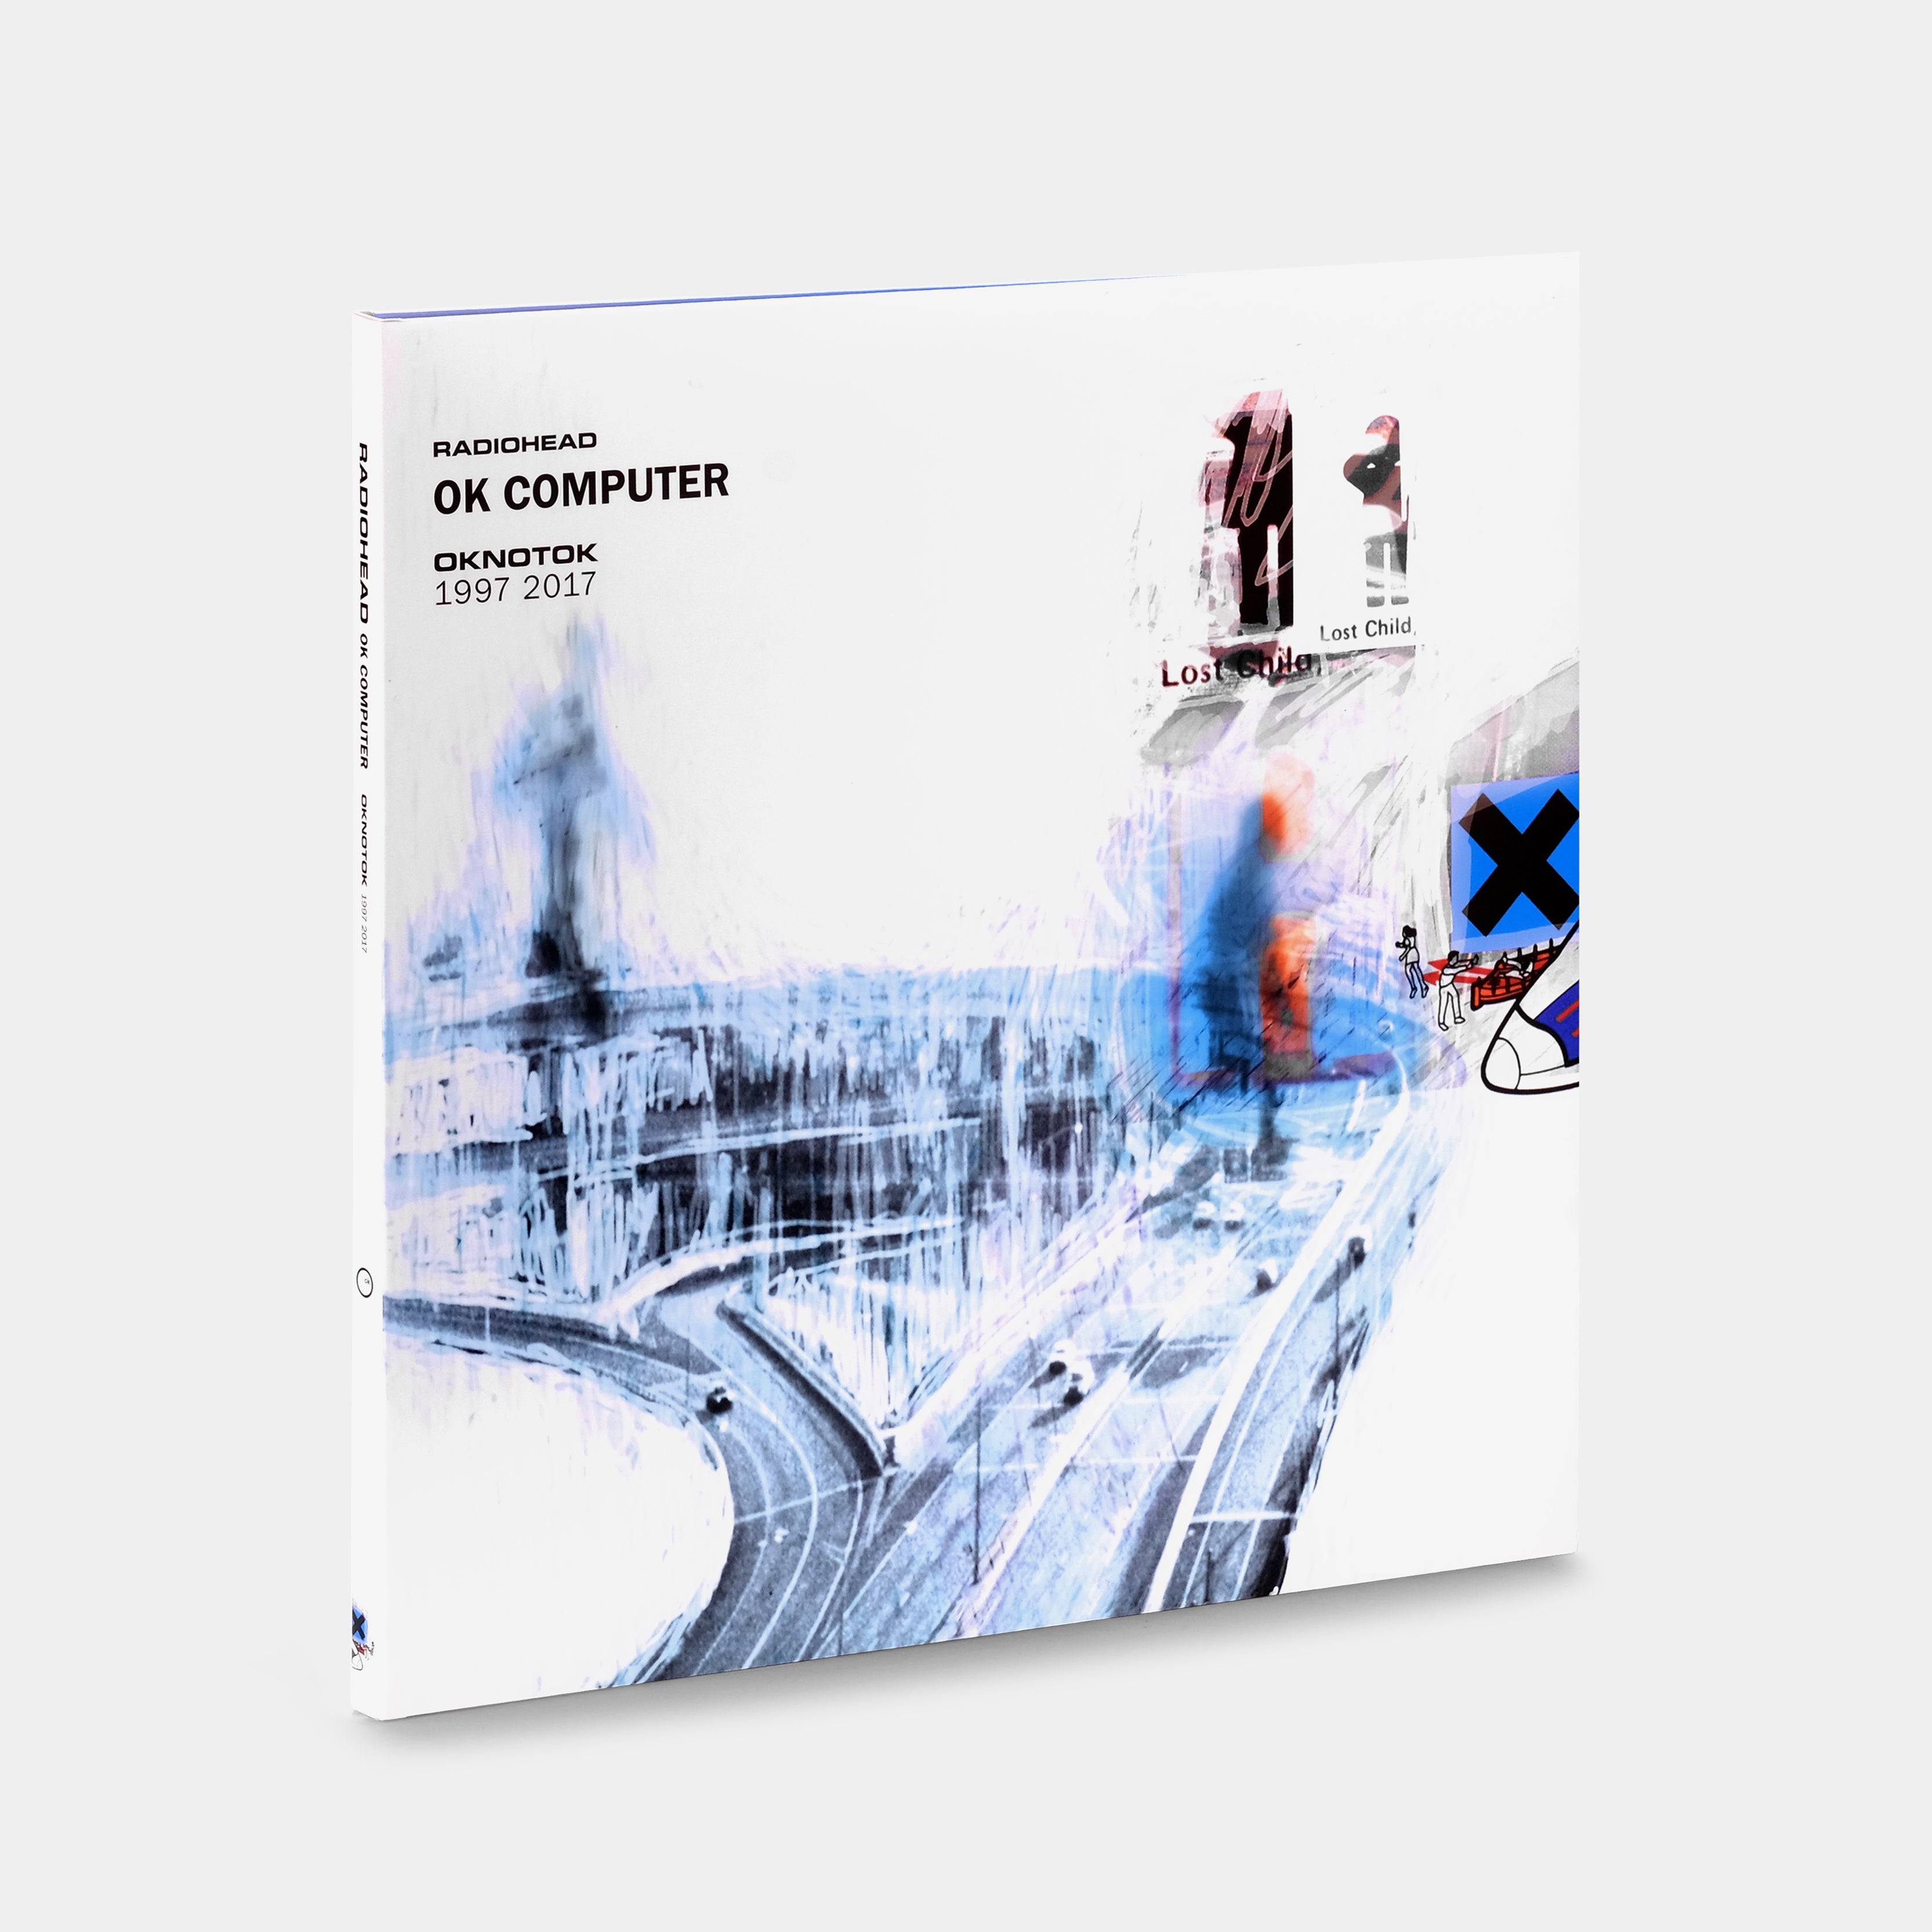 Radiohead - OK Computer OKNOTOK 1997 2017 3xLP Vinyl Record